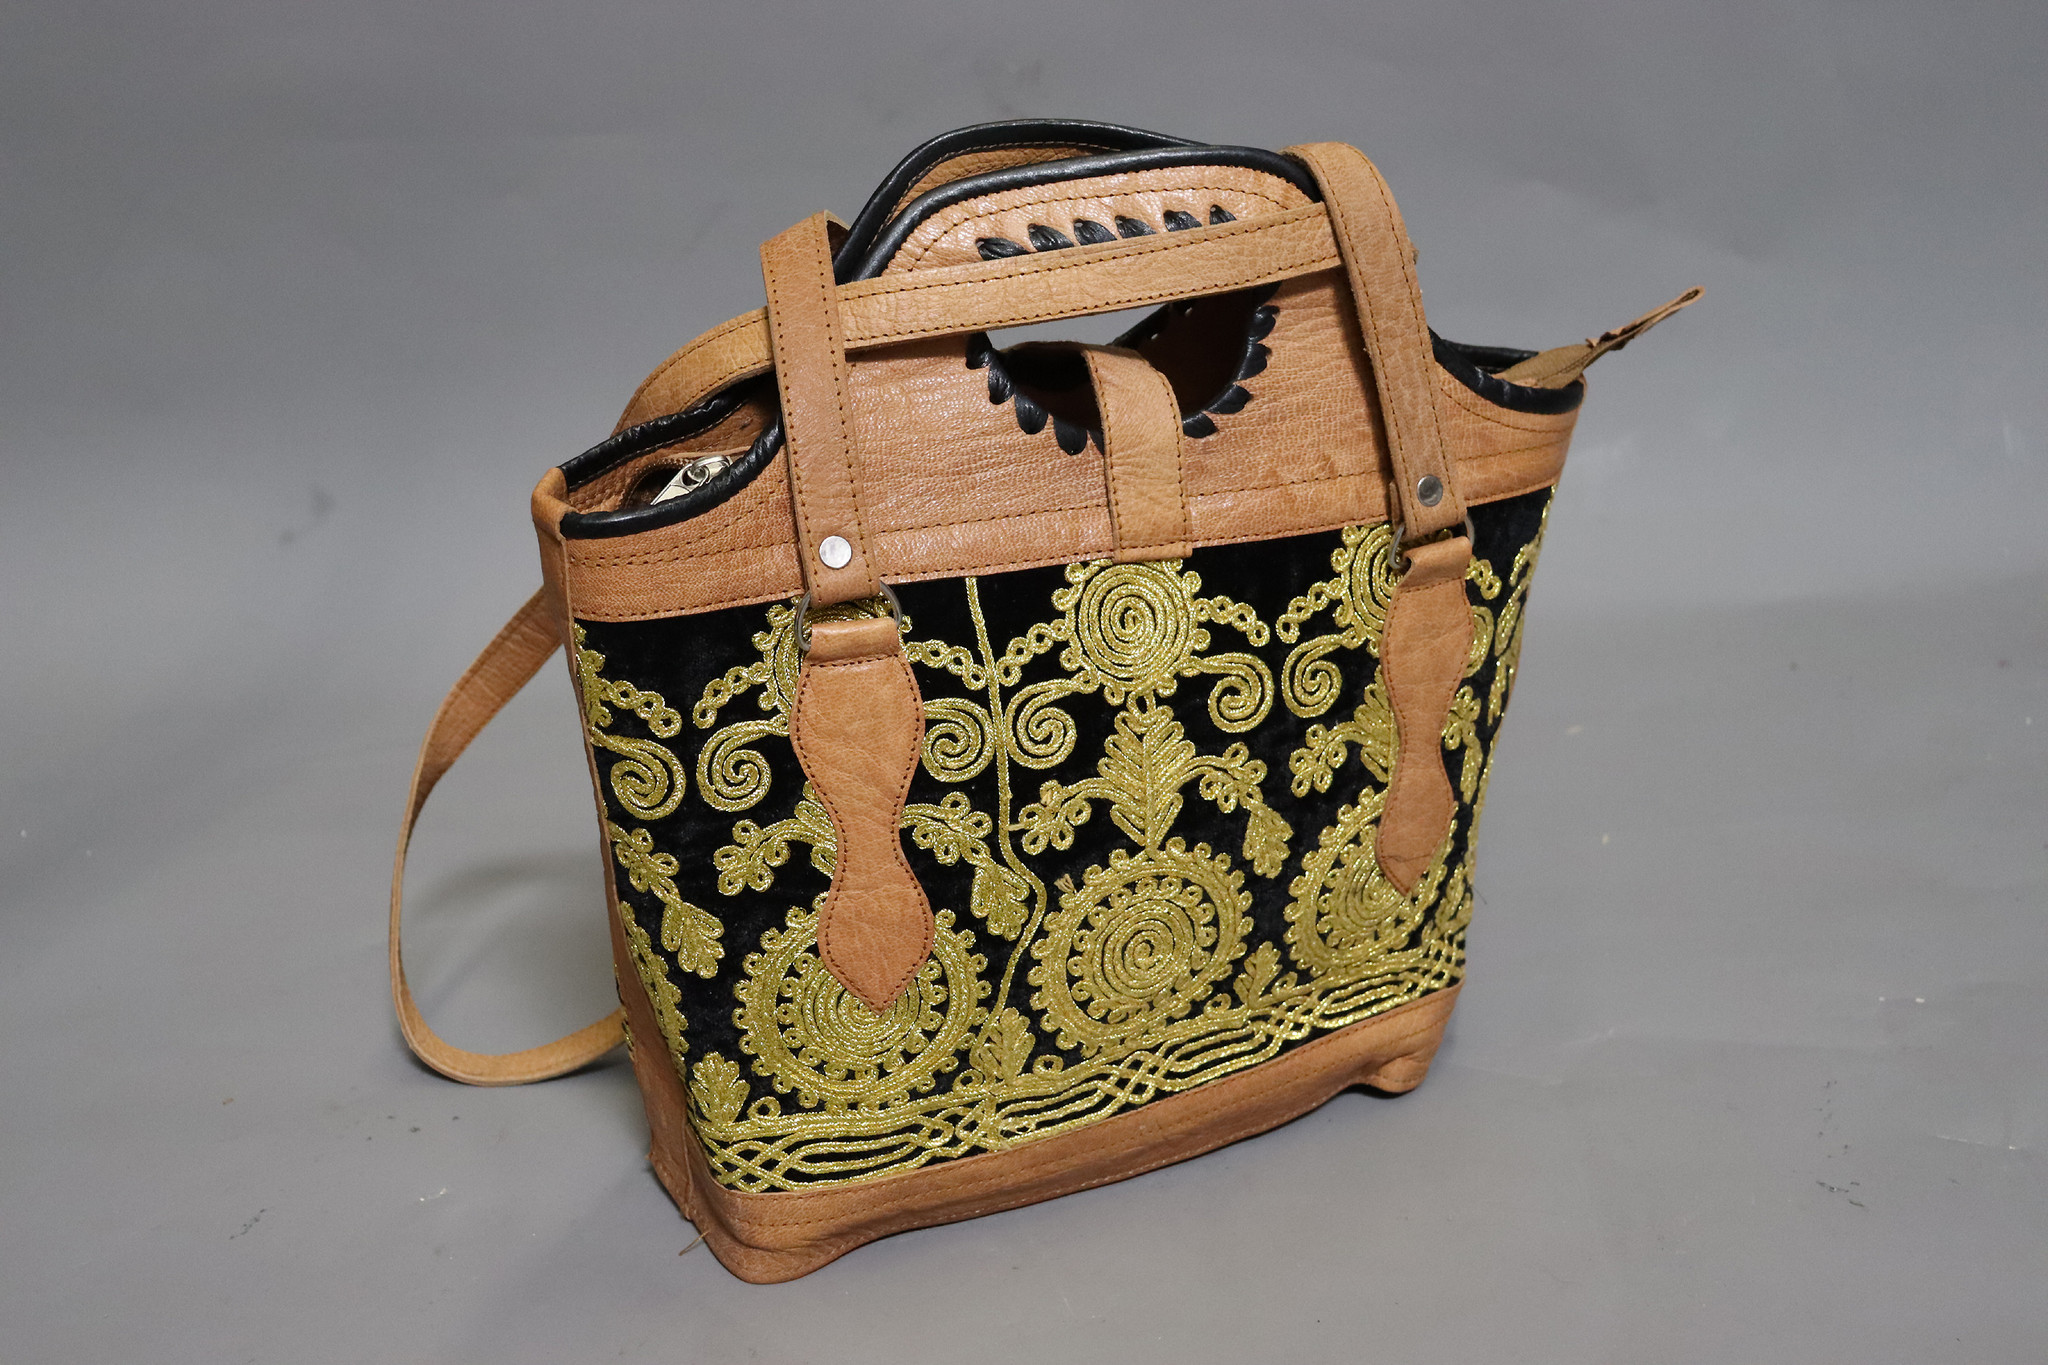 Rare Handmade Leather and Suzani Women's Shoulder Bag handbag shopper from Kabul Afghanistan No:23-5